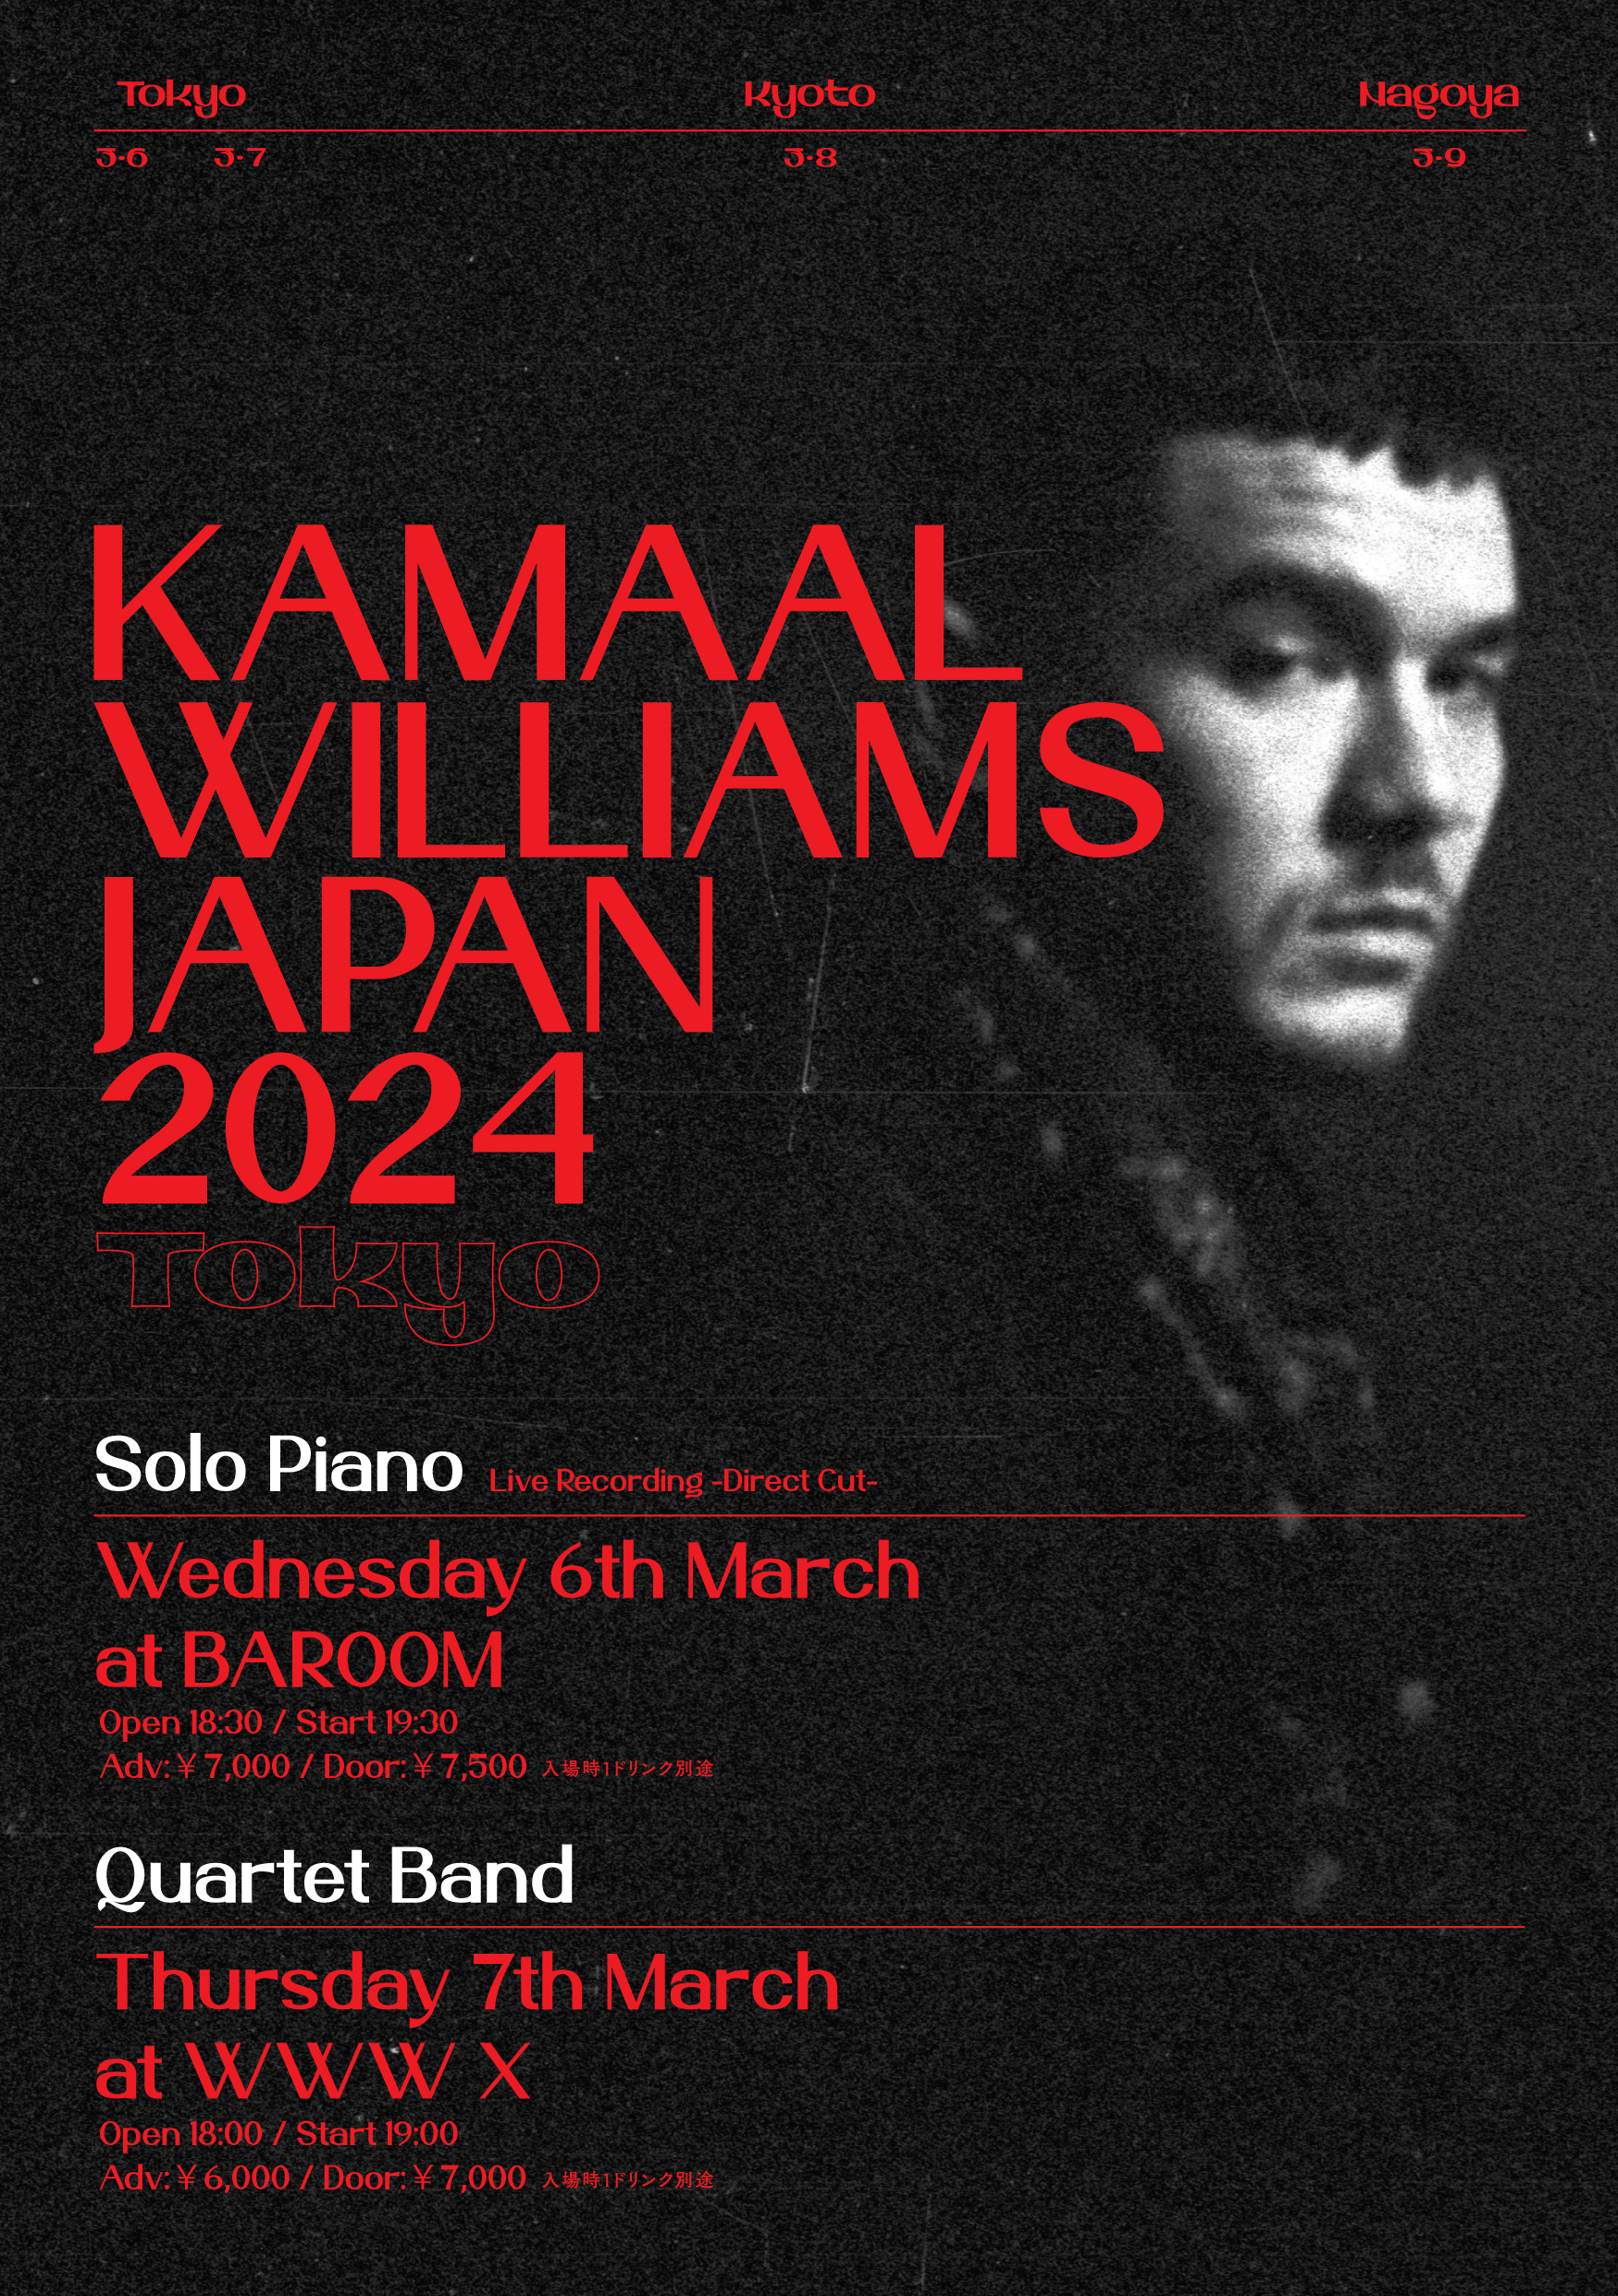 Kamaal Williams Japan Tour 2024 at WWW X